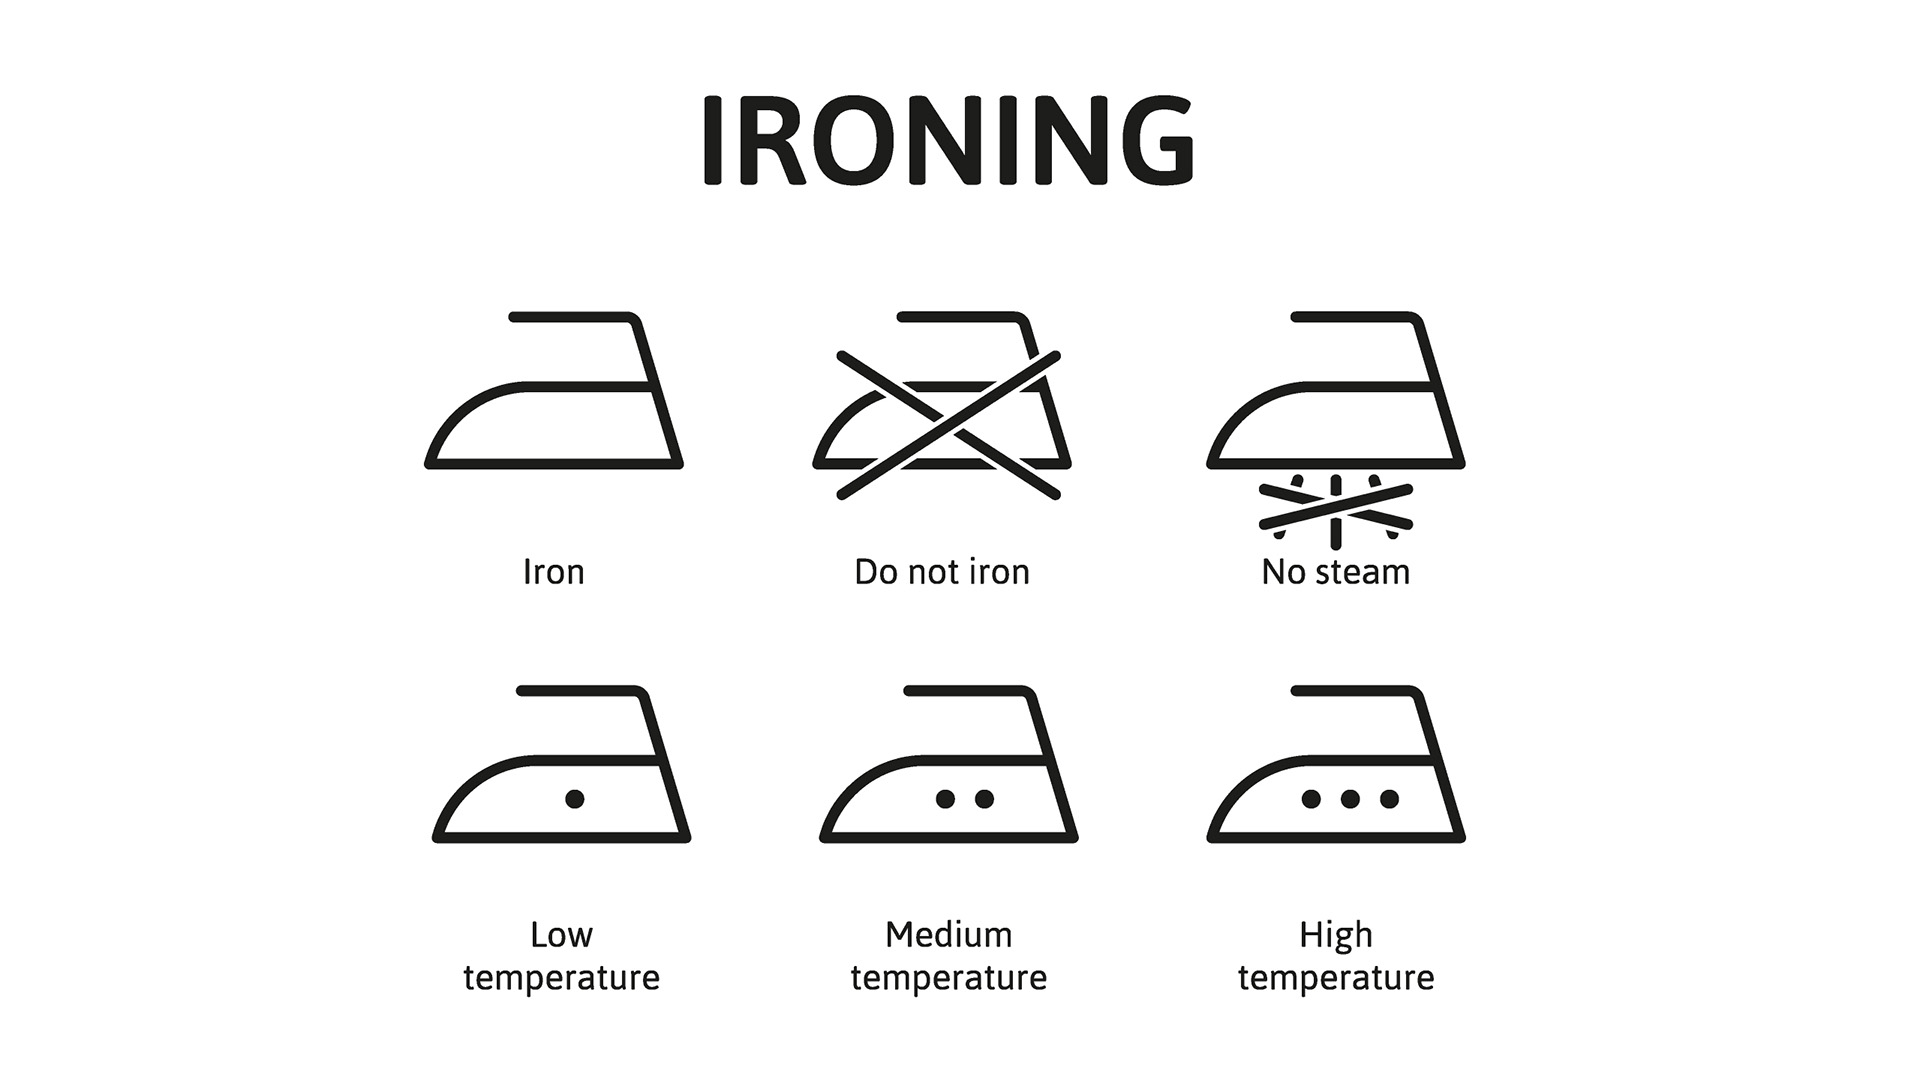 Ironing symbols guide.